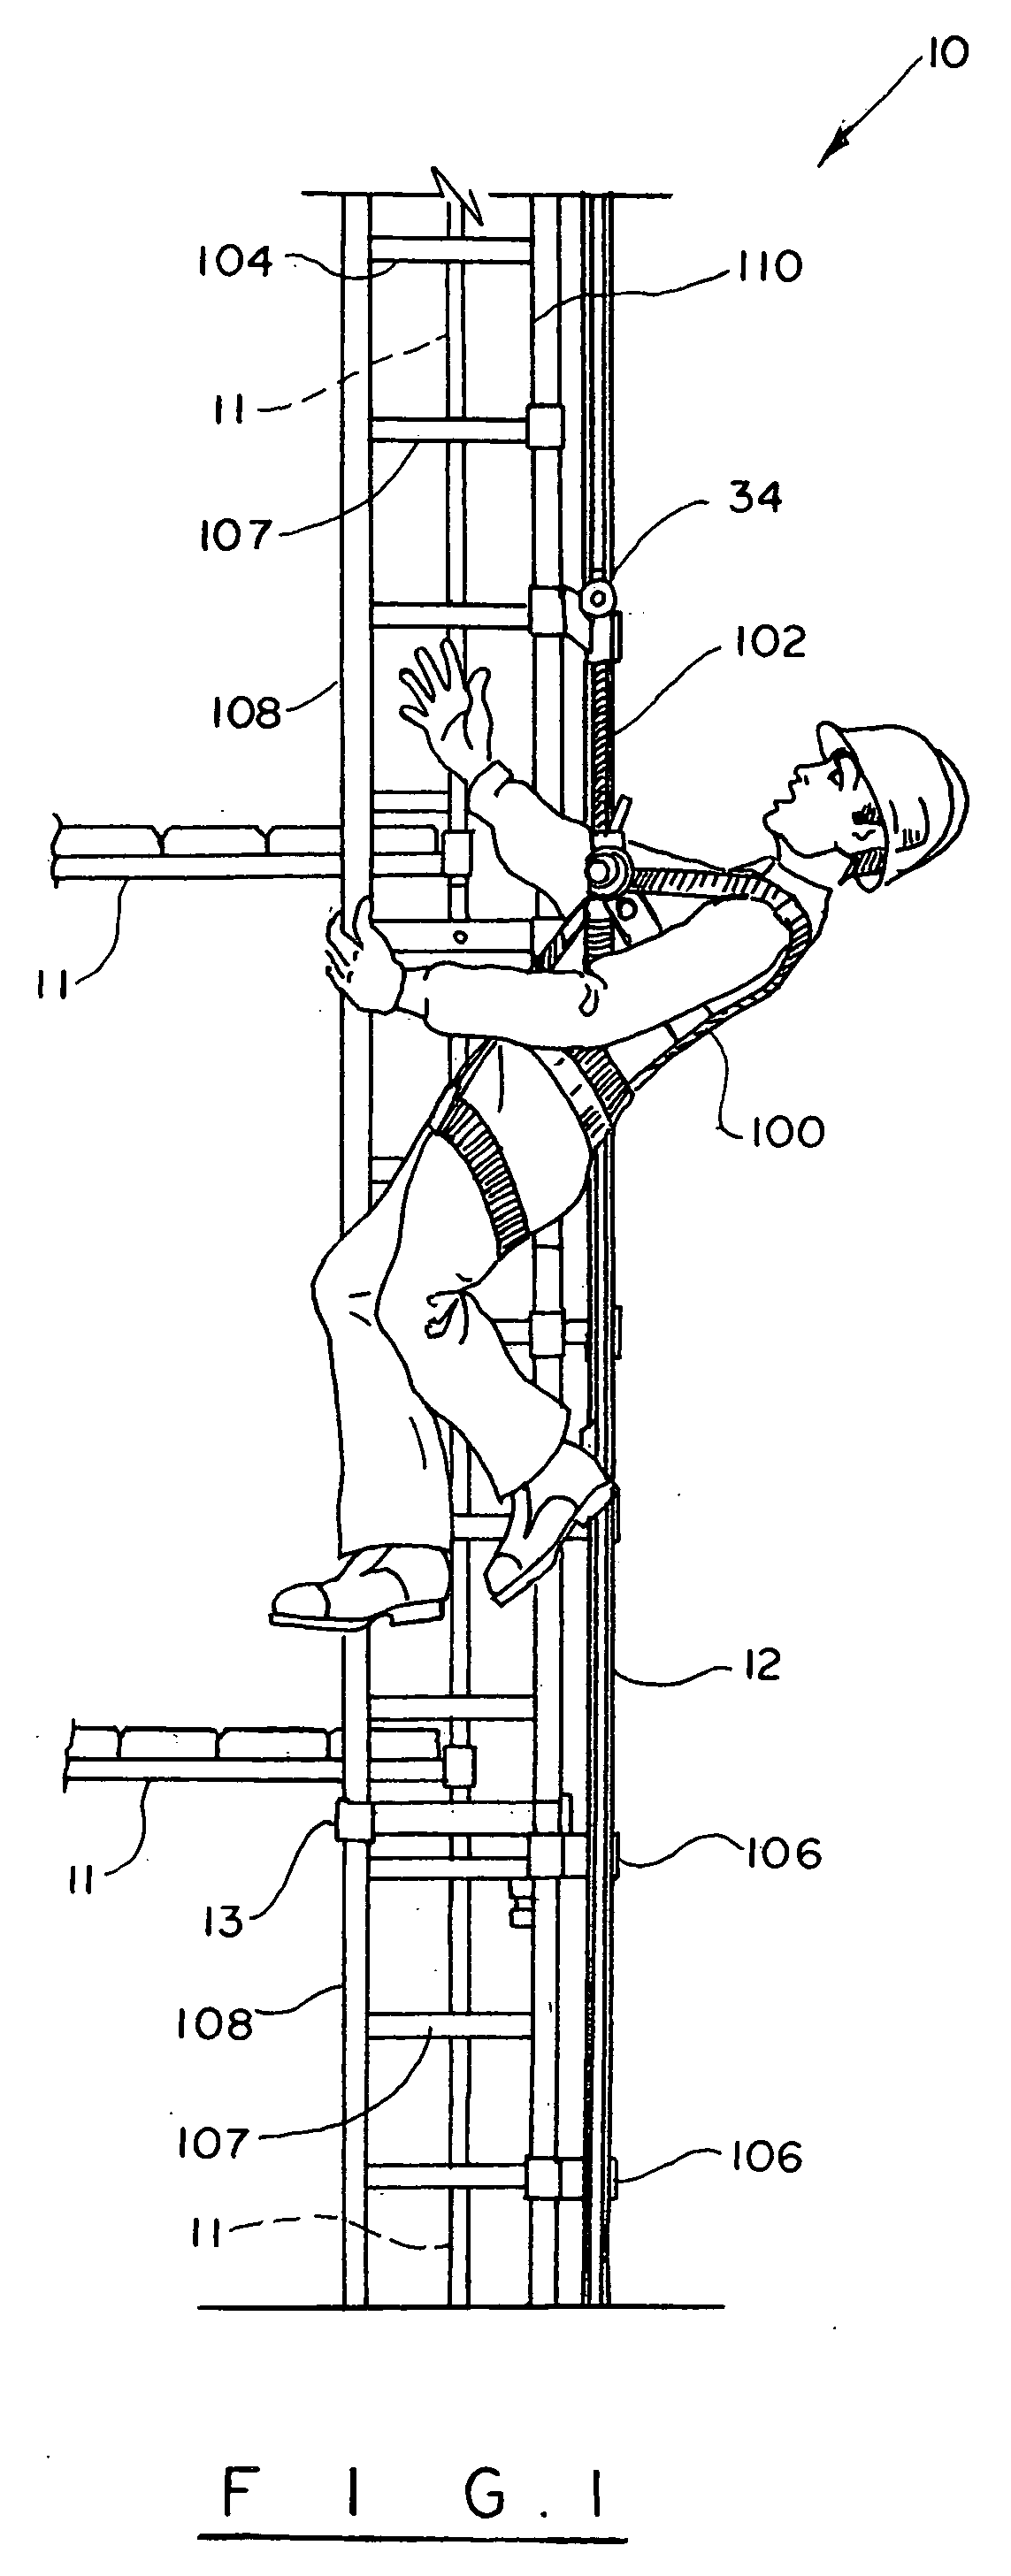 Ladder safety apparatus